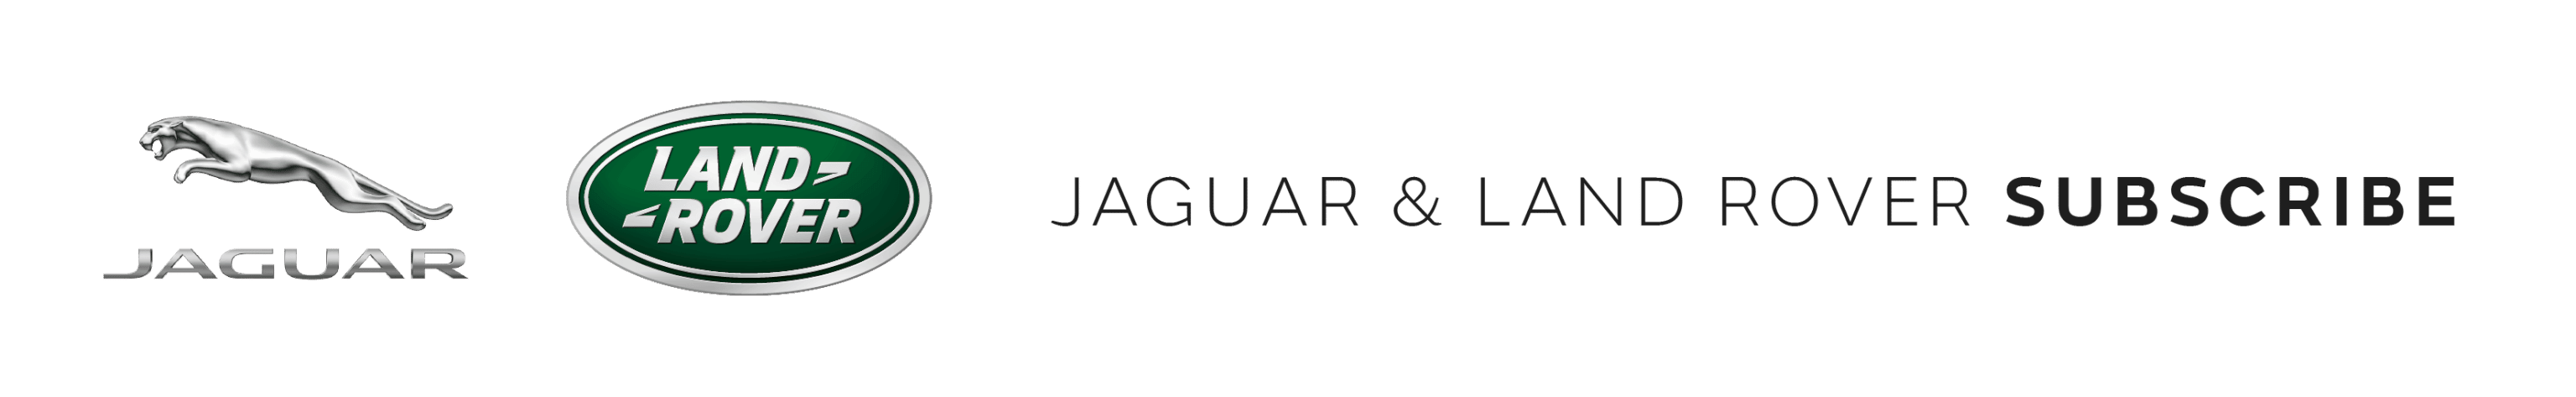 Jaguar & Land Rover Subscribe